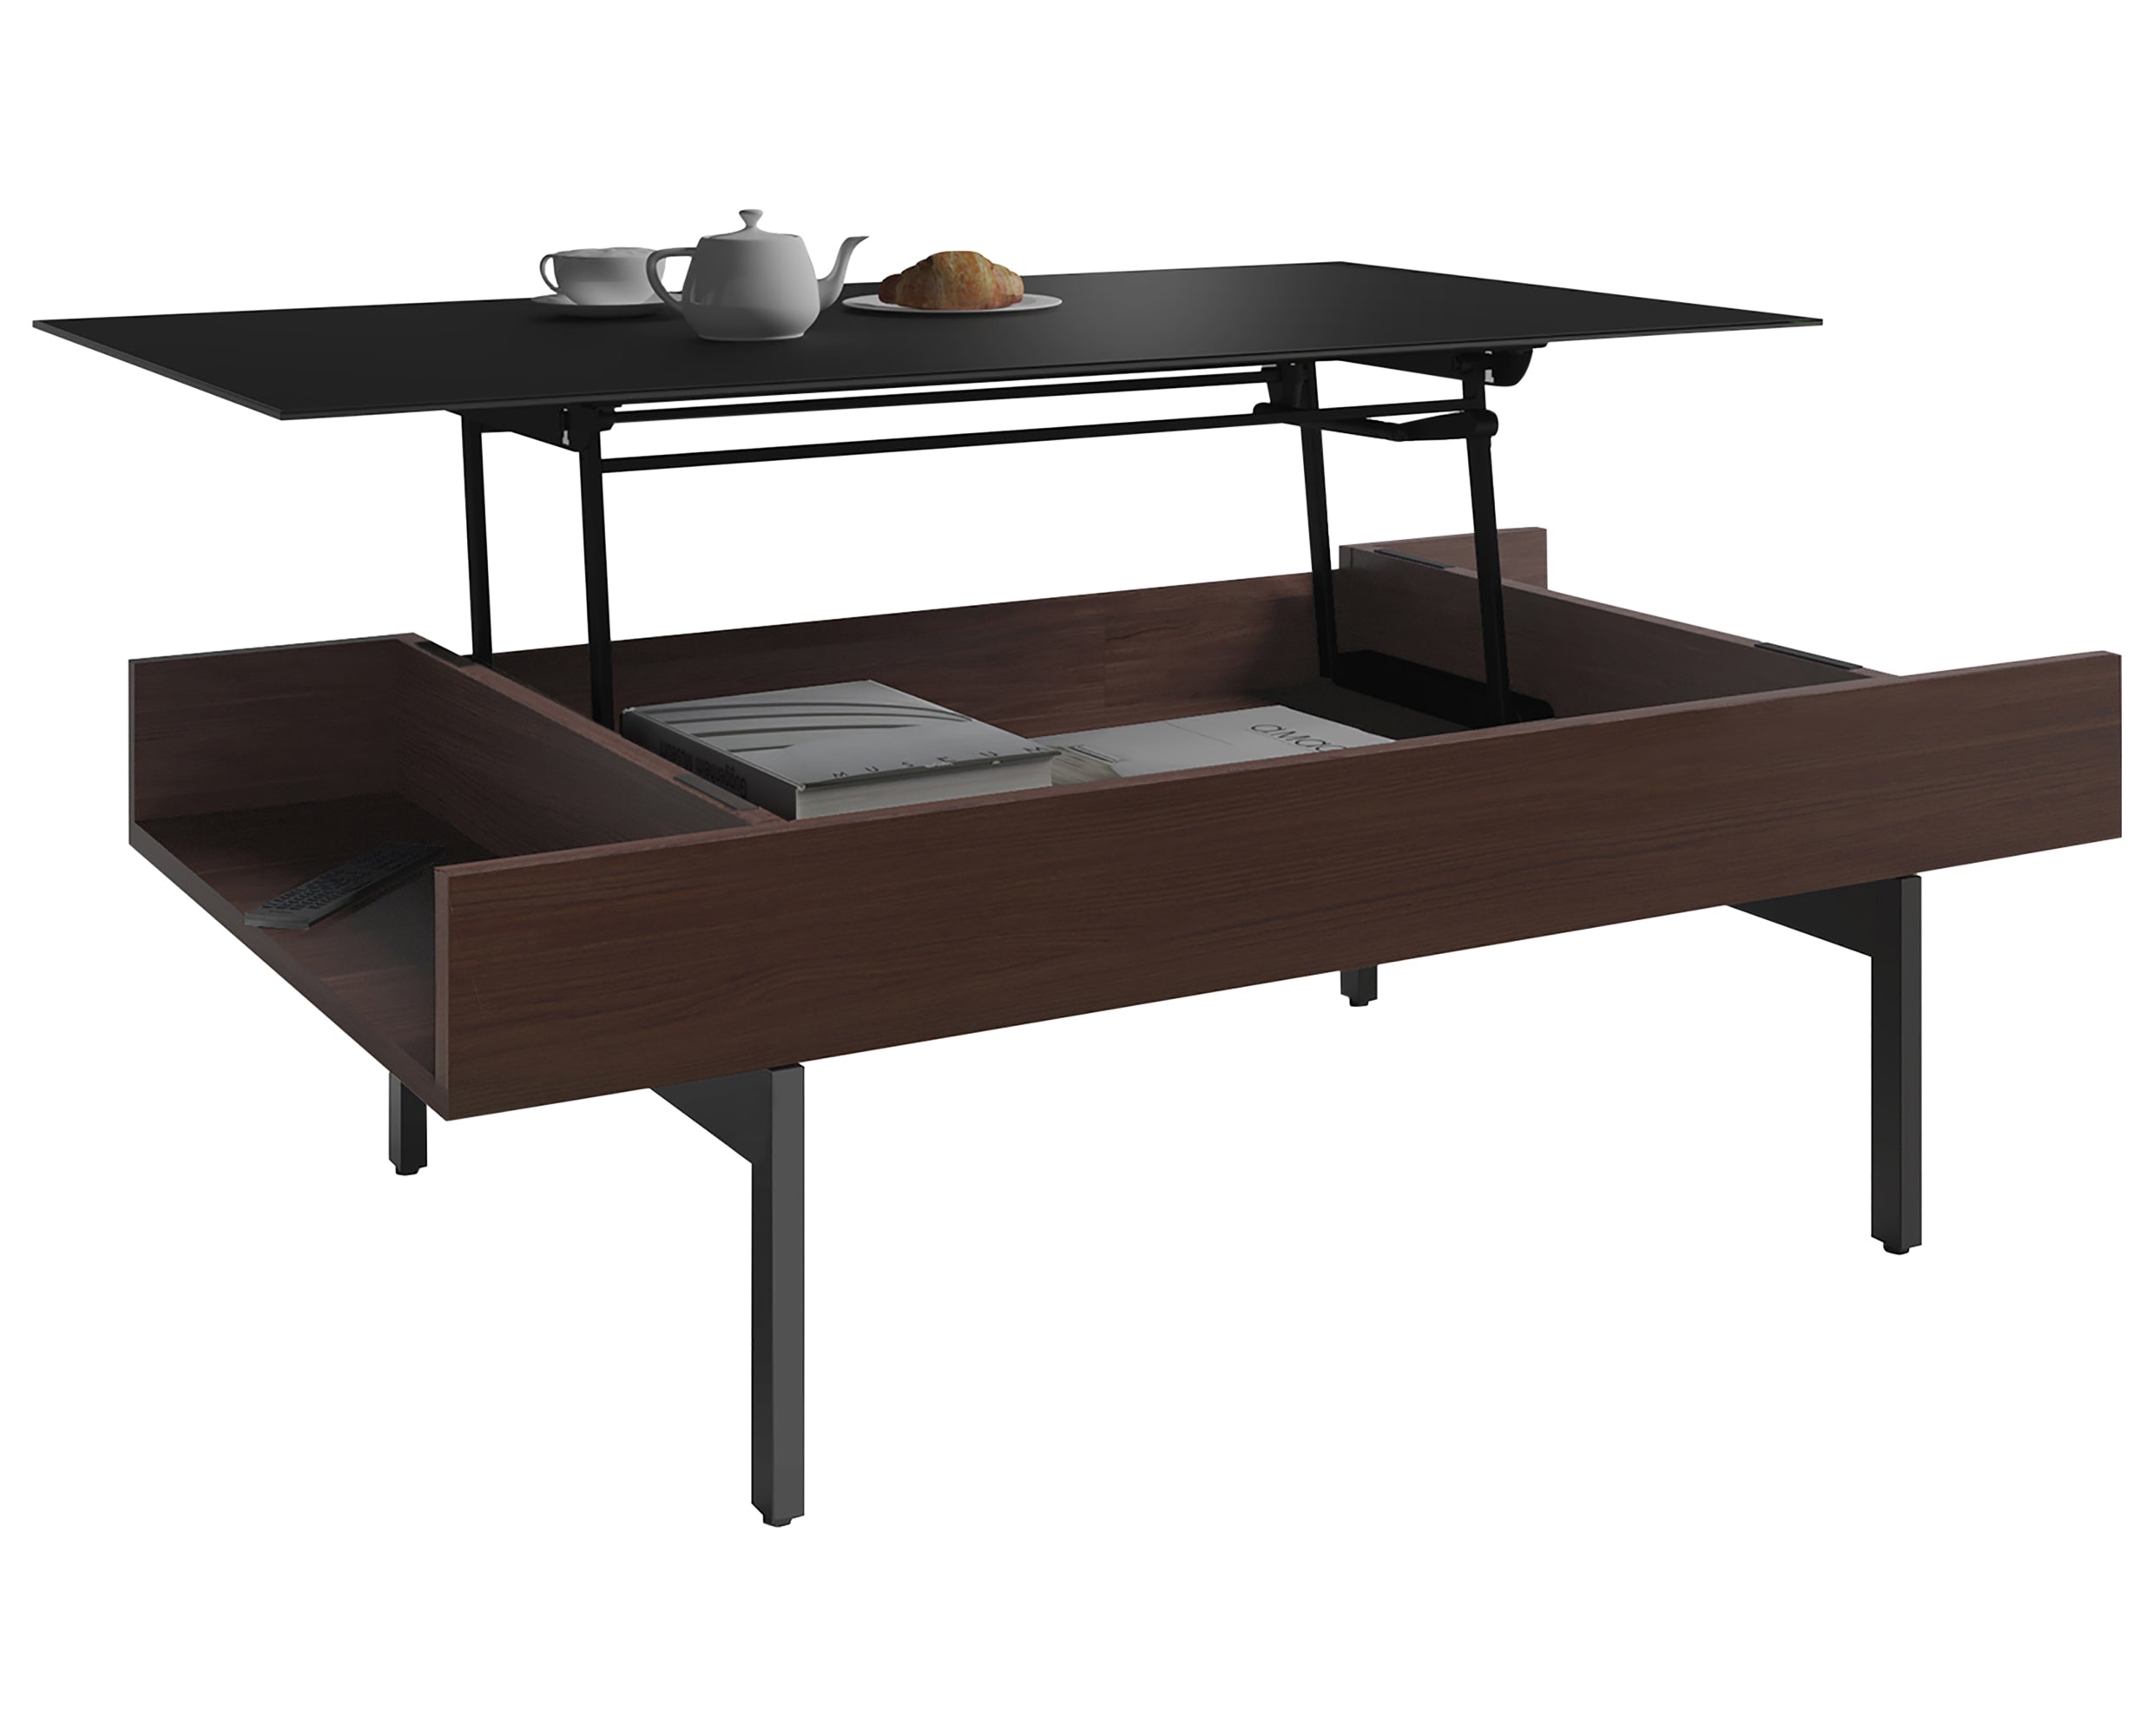 Chocolate Walnut Veneer & Black Satin-Etched Glass with Black Steel | BDI Reveal Lift Coffee Table | Valley Ridge Furniture